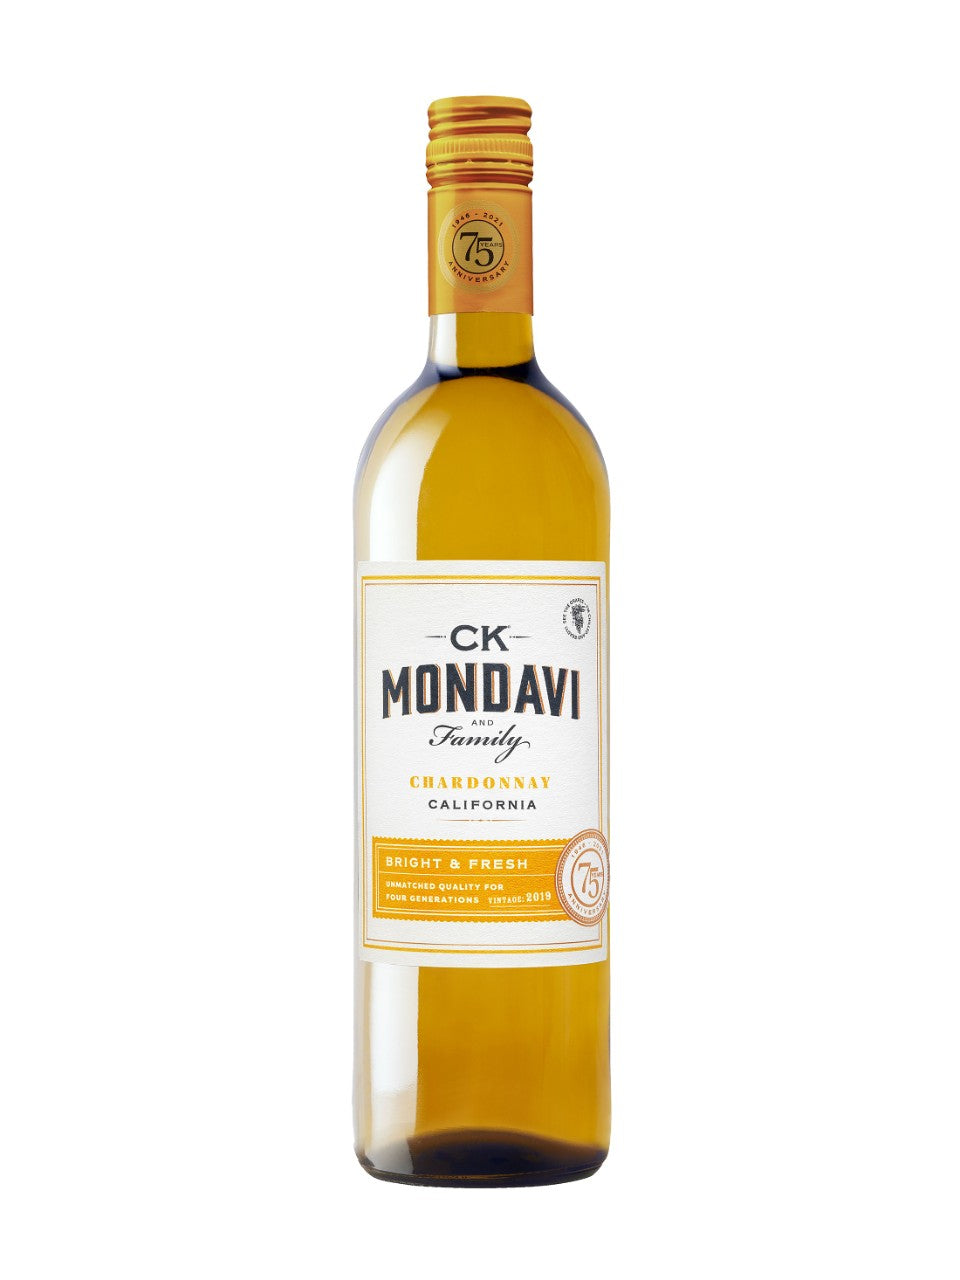 CK Mondavi Chardonnay 750 mL bottle